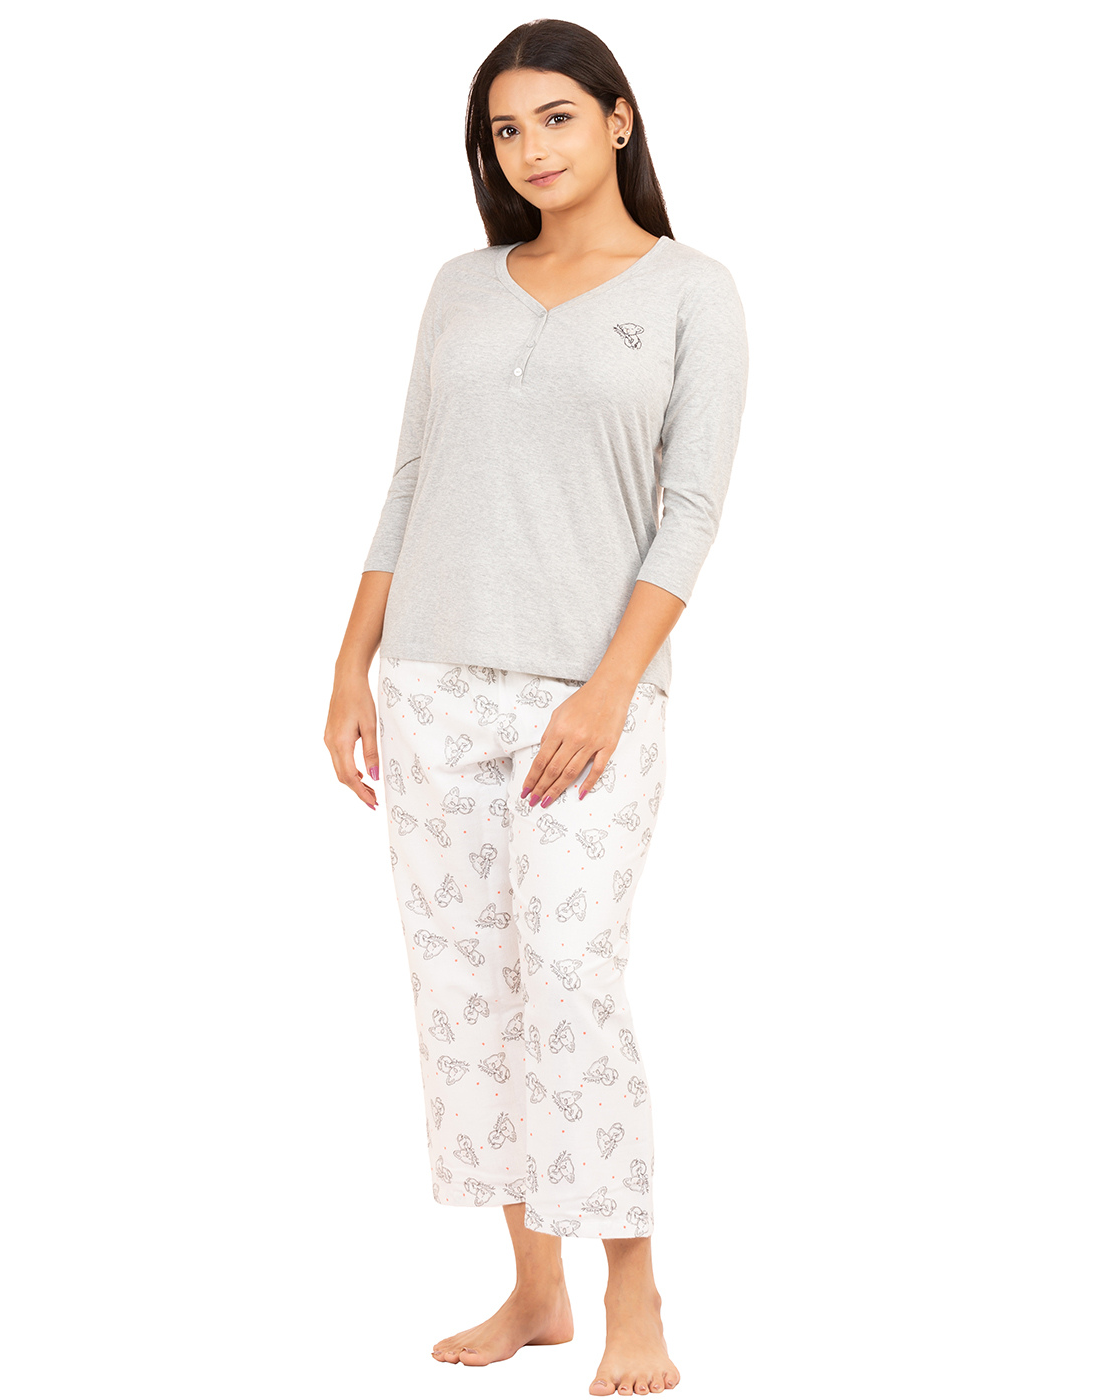 Pyjama Set for Women-Koala Bear Print